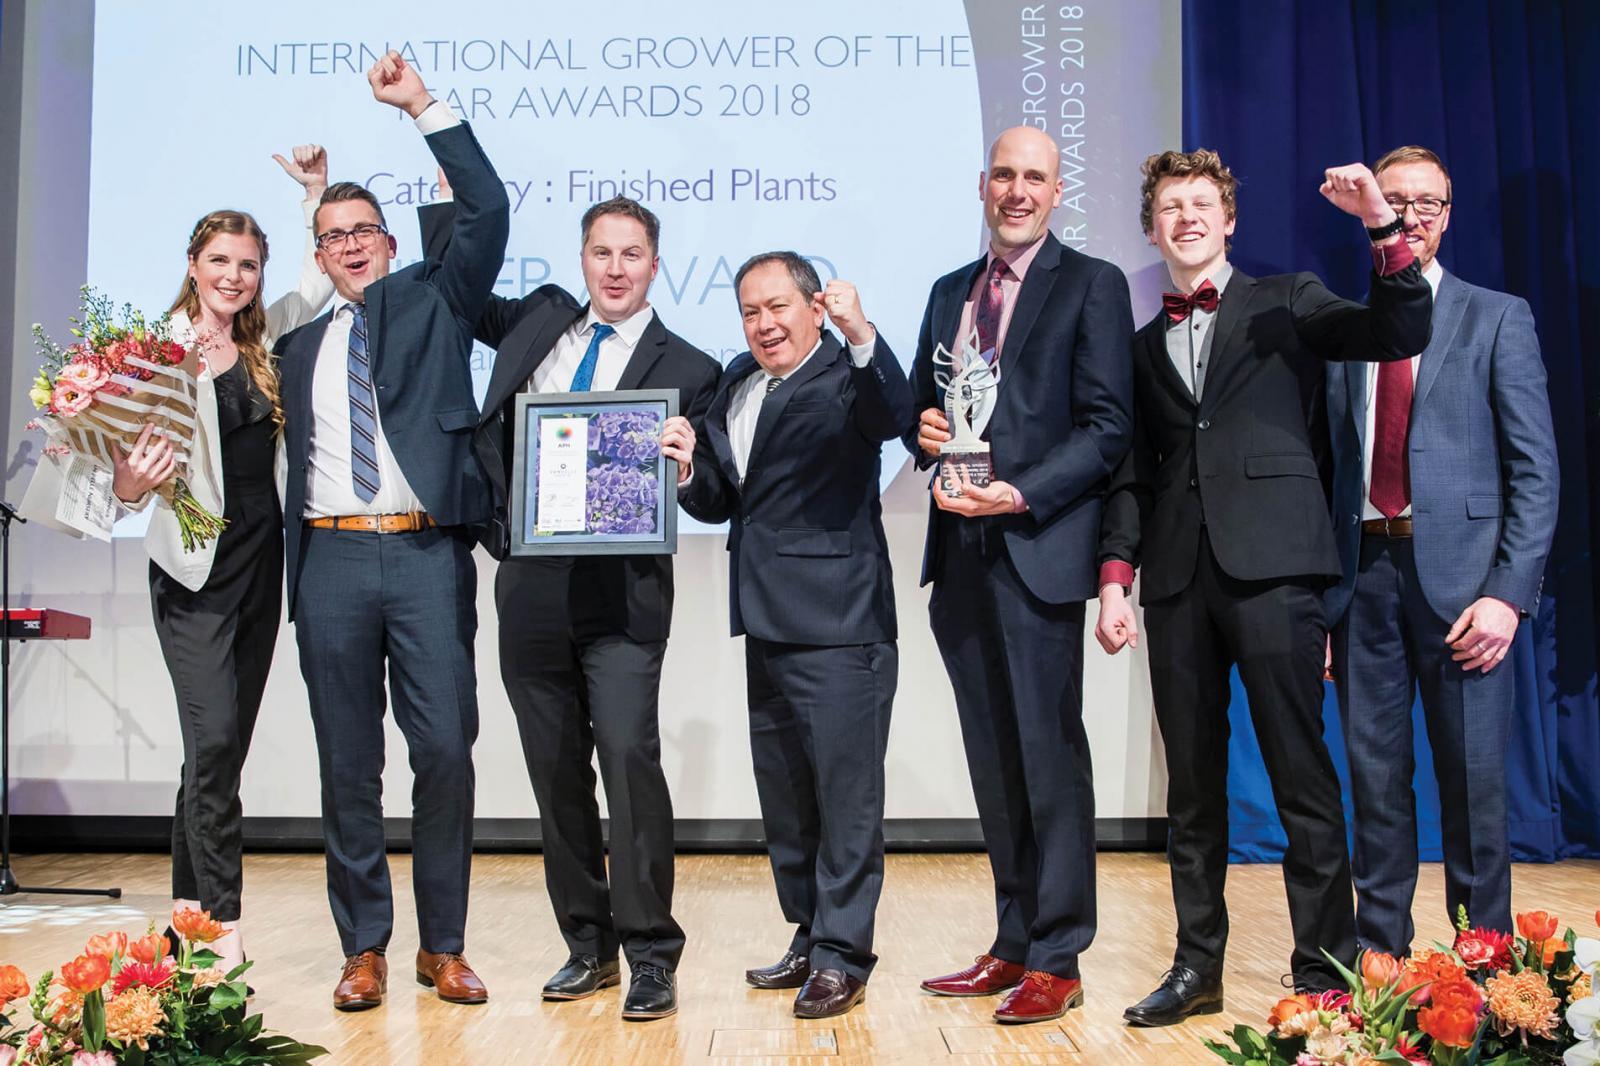 Van Belle Nursery was awarded International Grower of the Year for 2018 in two categories.